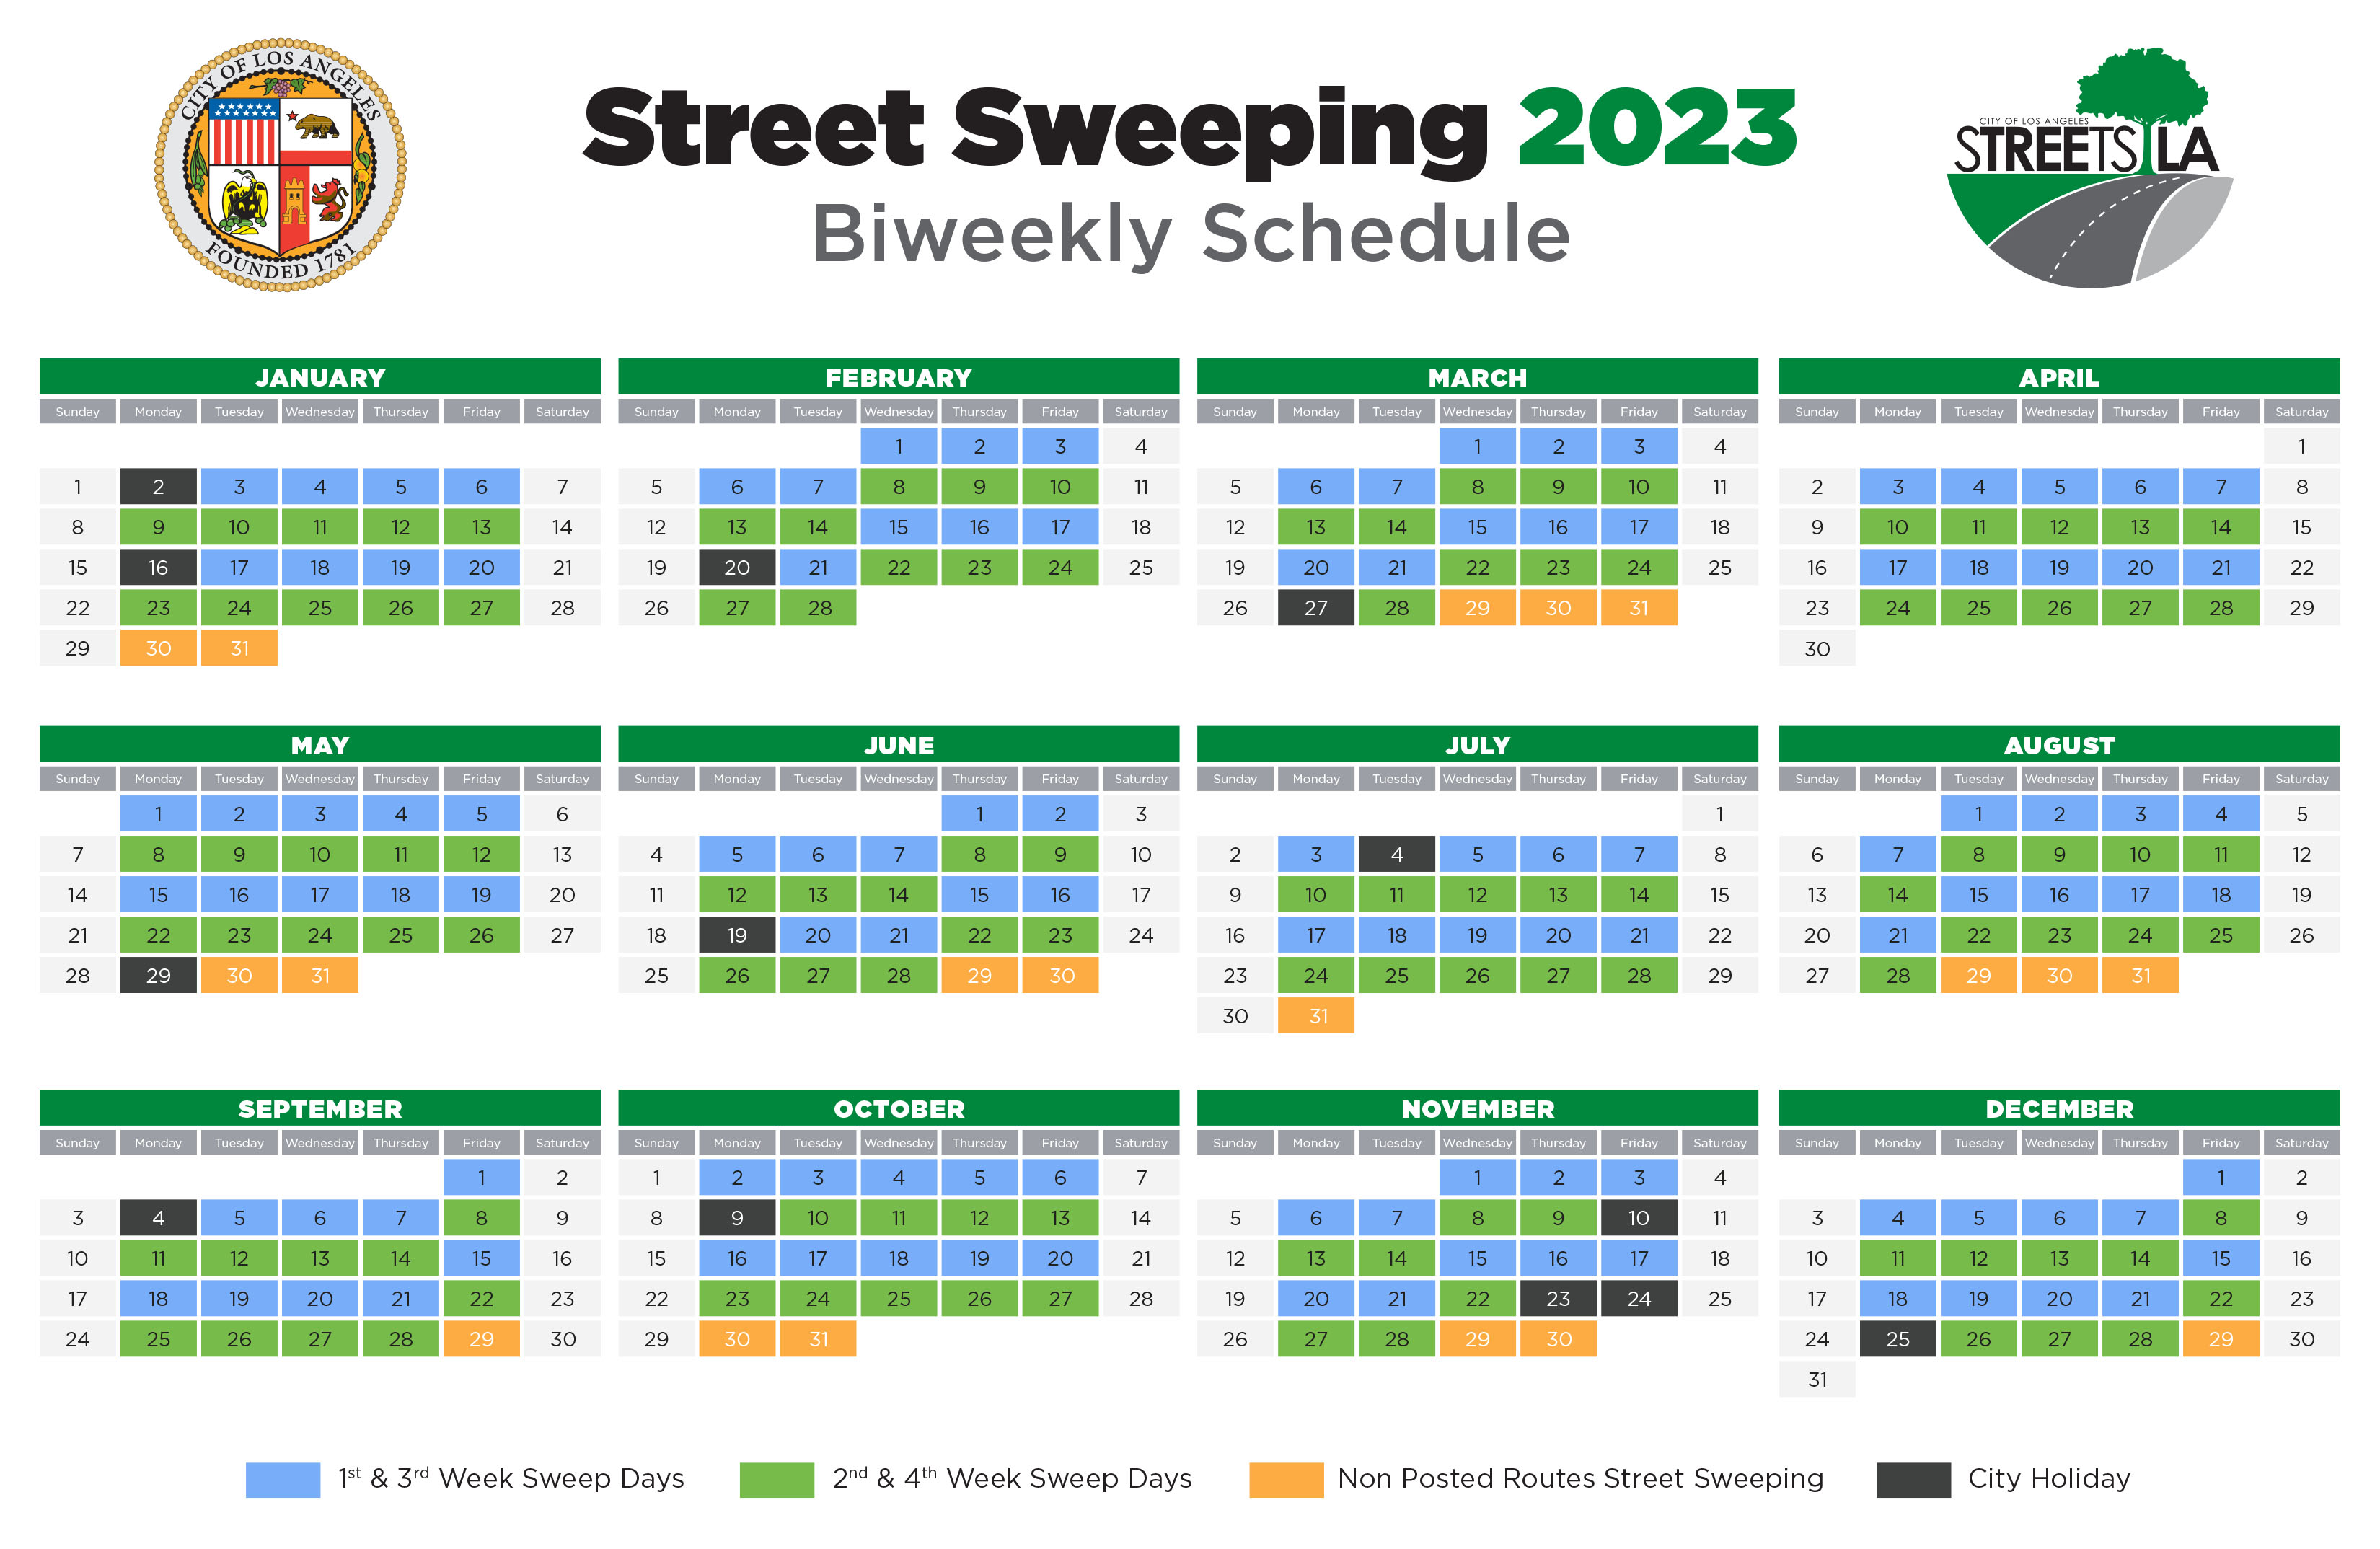 StreetsLA Street Sweeping 2023